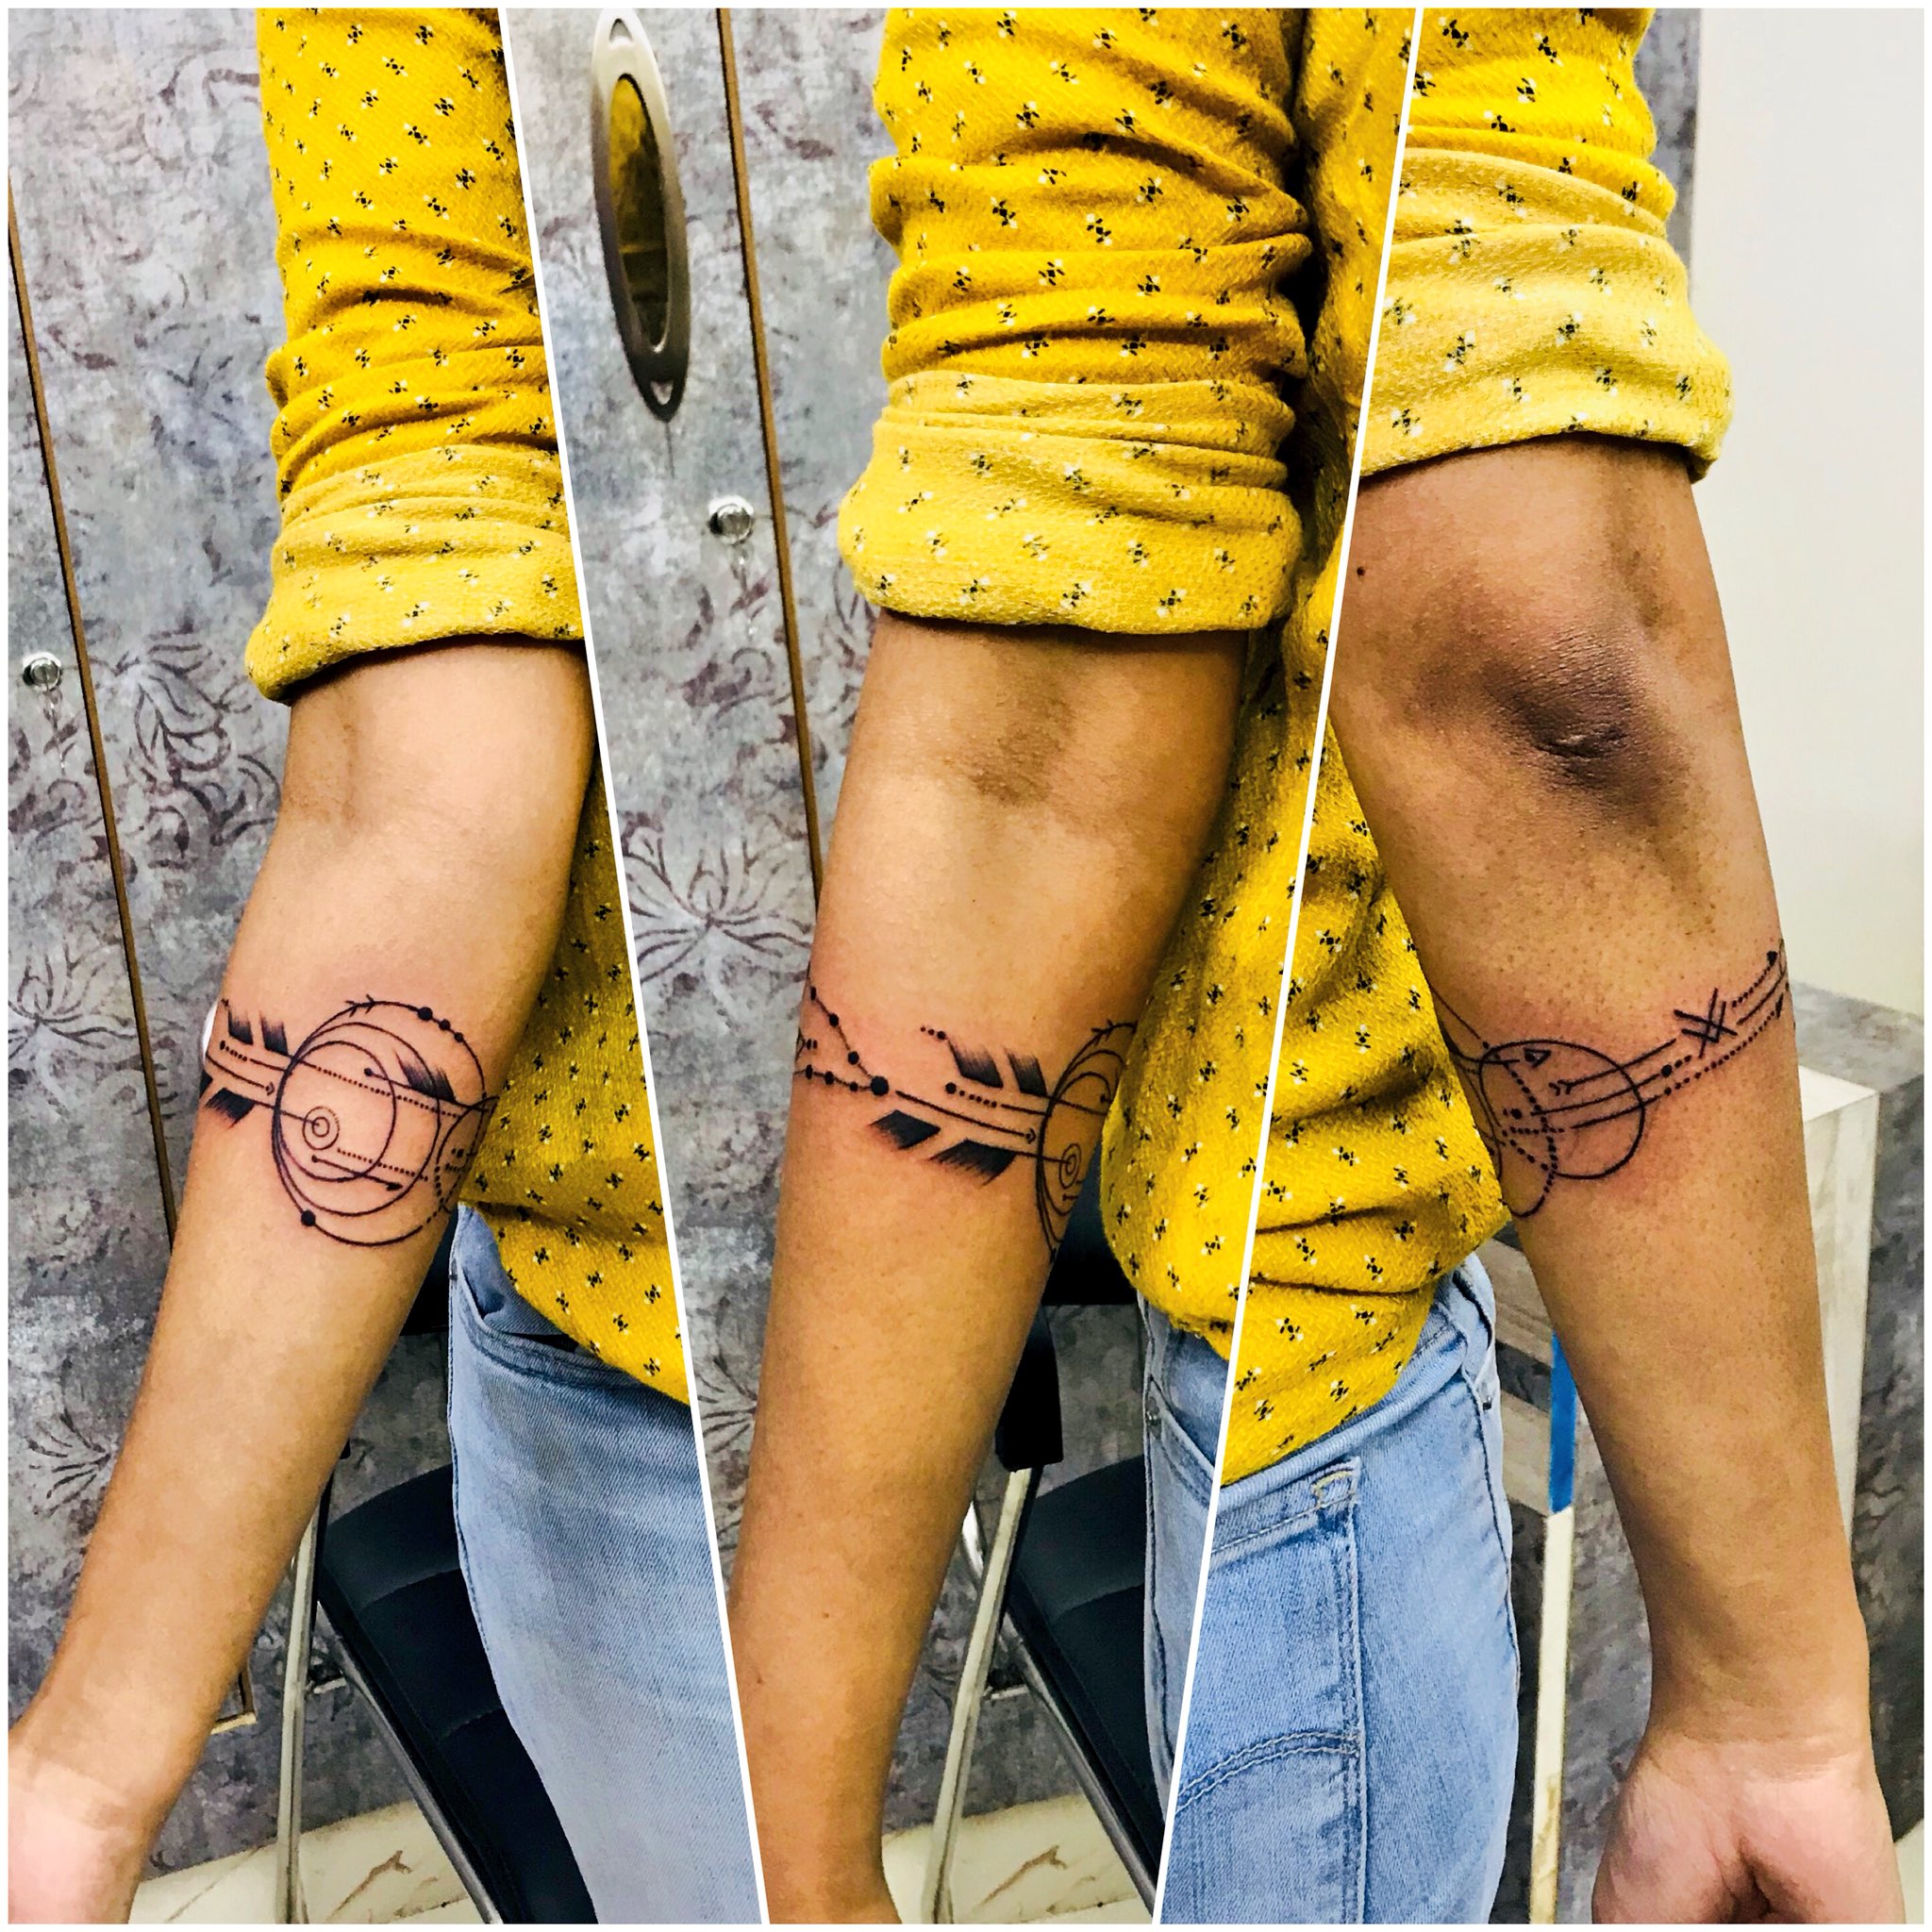 Wens wijsheid achterlijk persoon Yantra Tattoos on Twitter: "Geometrical arrow with star constellation as armband  tattoo #yantratattoos #yantrachennai #tattooart #inkedgirls @yantratattoos  https://t.co/Ny7FtYUWIF" / Twitter